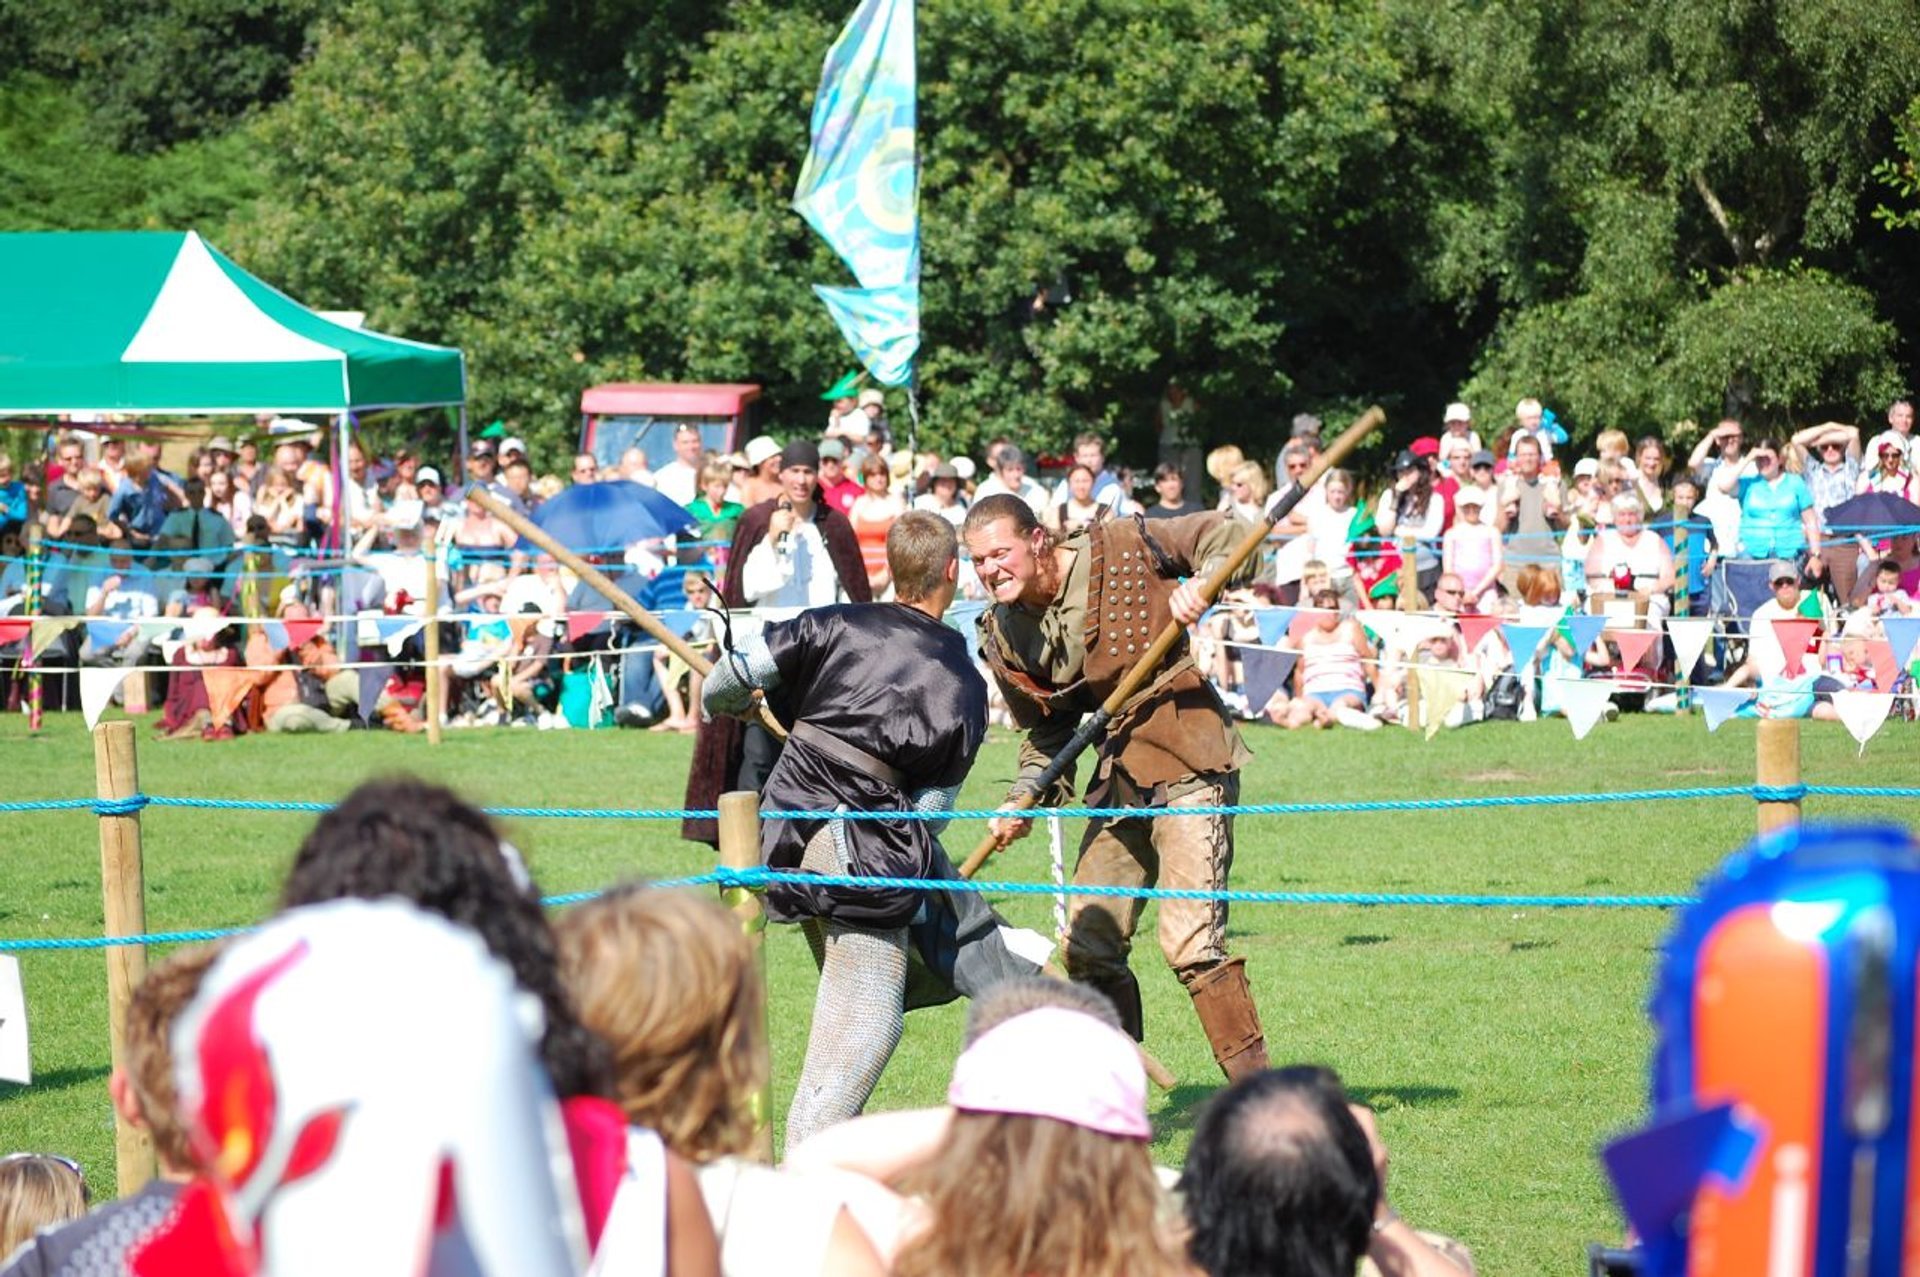 Robin Hood Festival 2023 in England Dates